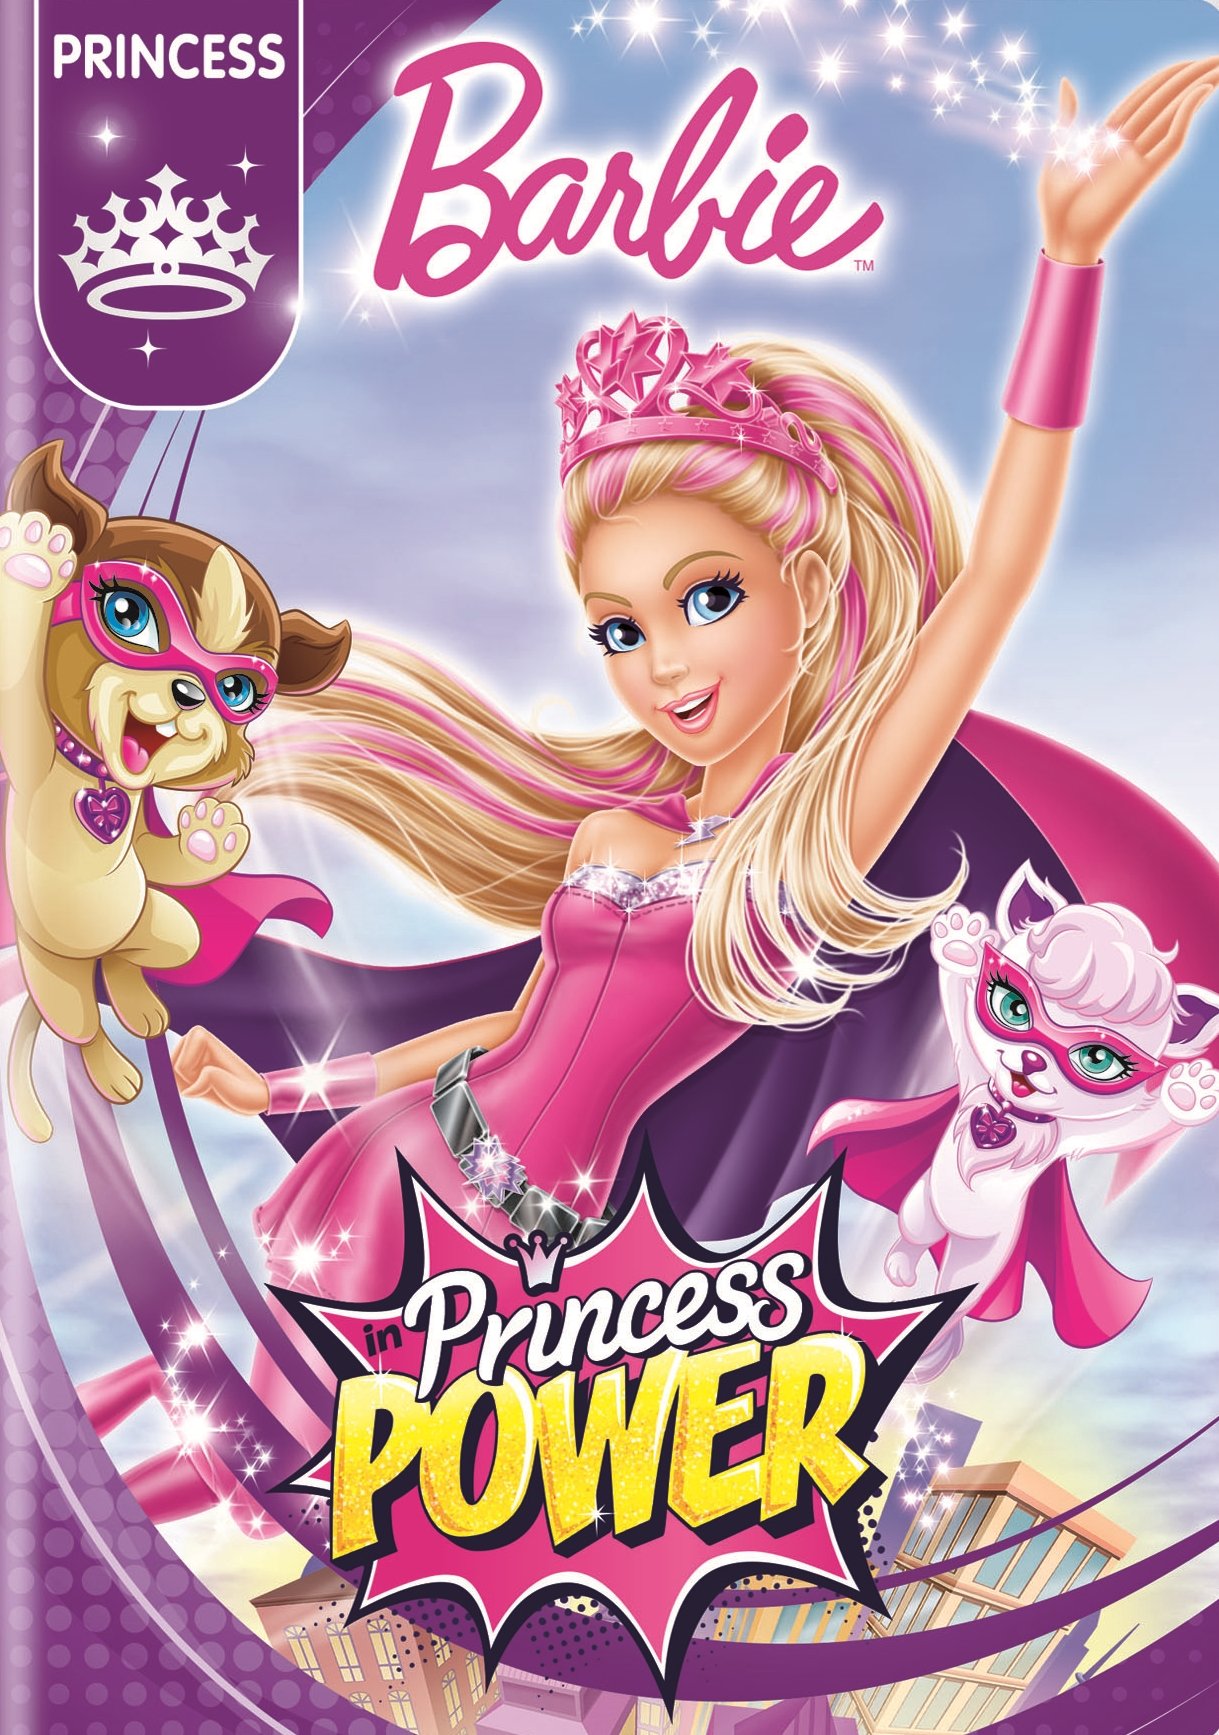 Barbie In Princess Power Main Poster